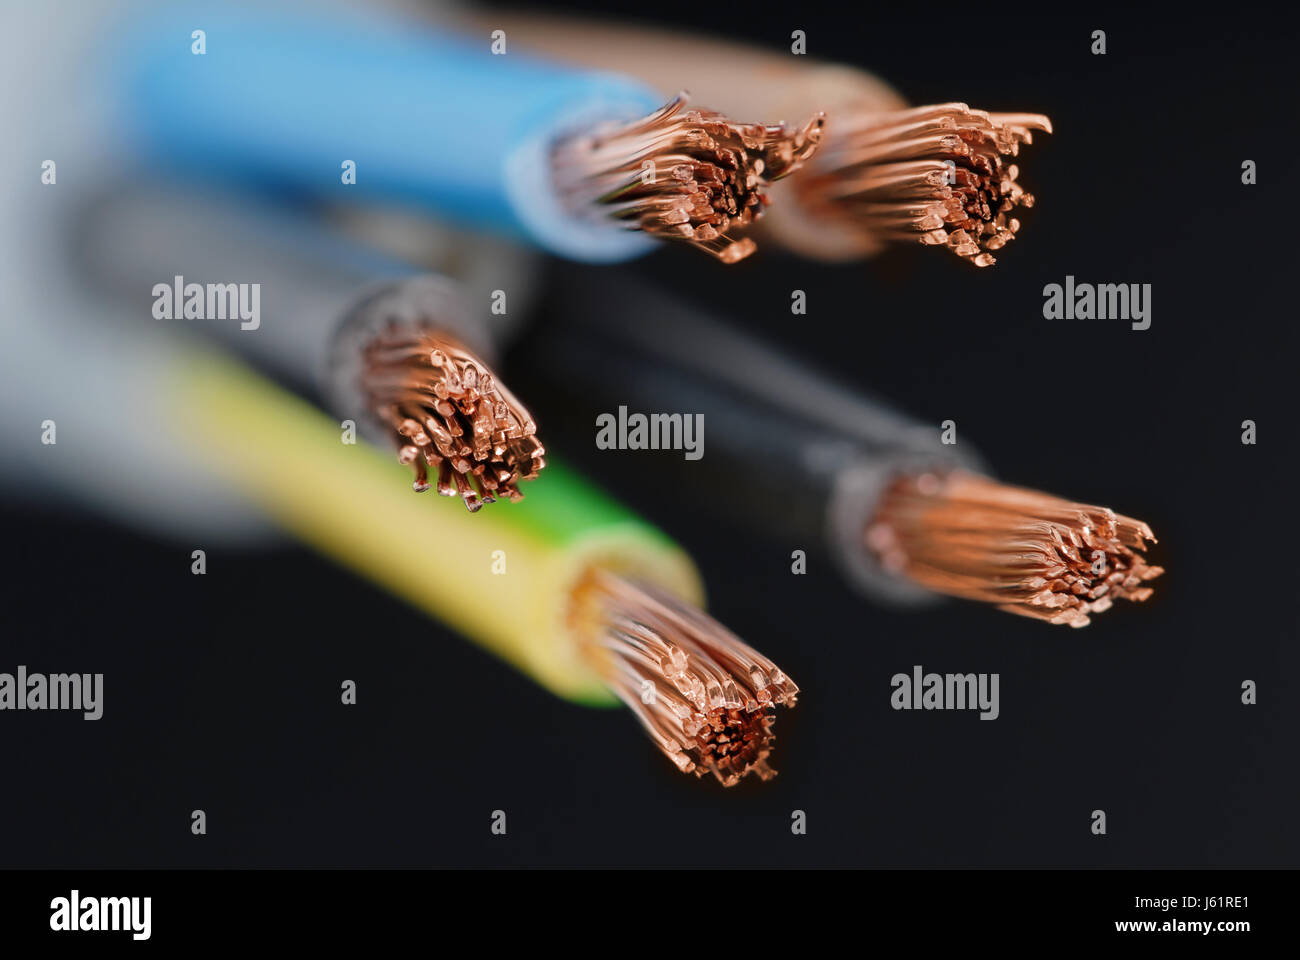 https://c8.alamy.com/compde/j61re1/draht-litze-kabel-leitung-elektronik-energie-macht-strom-j61re1.jpg